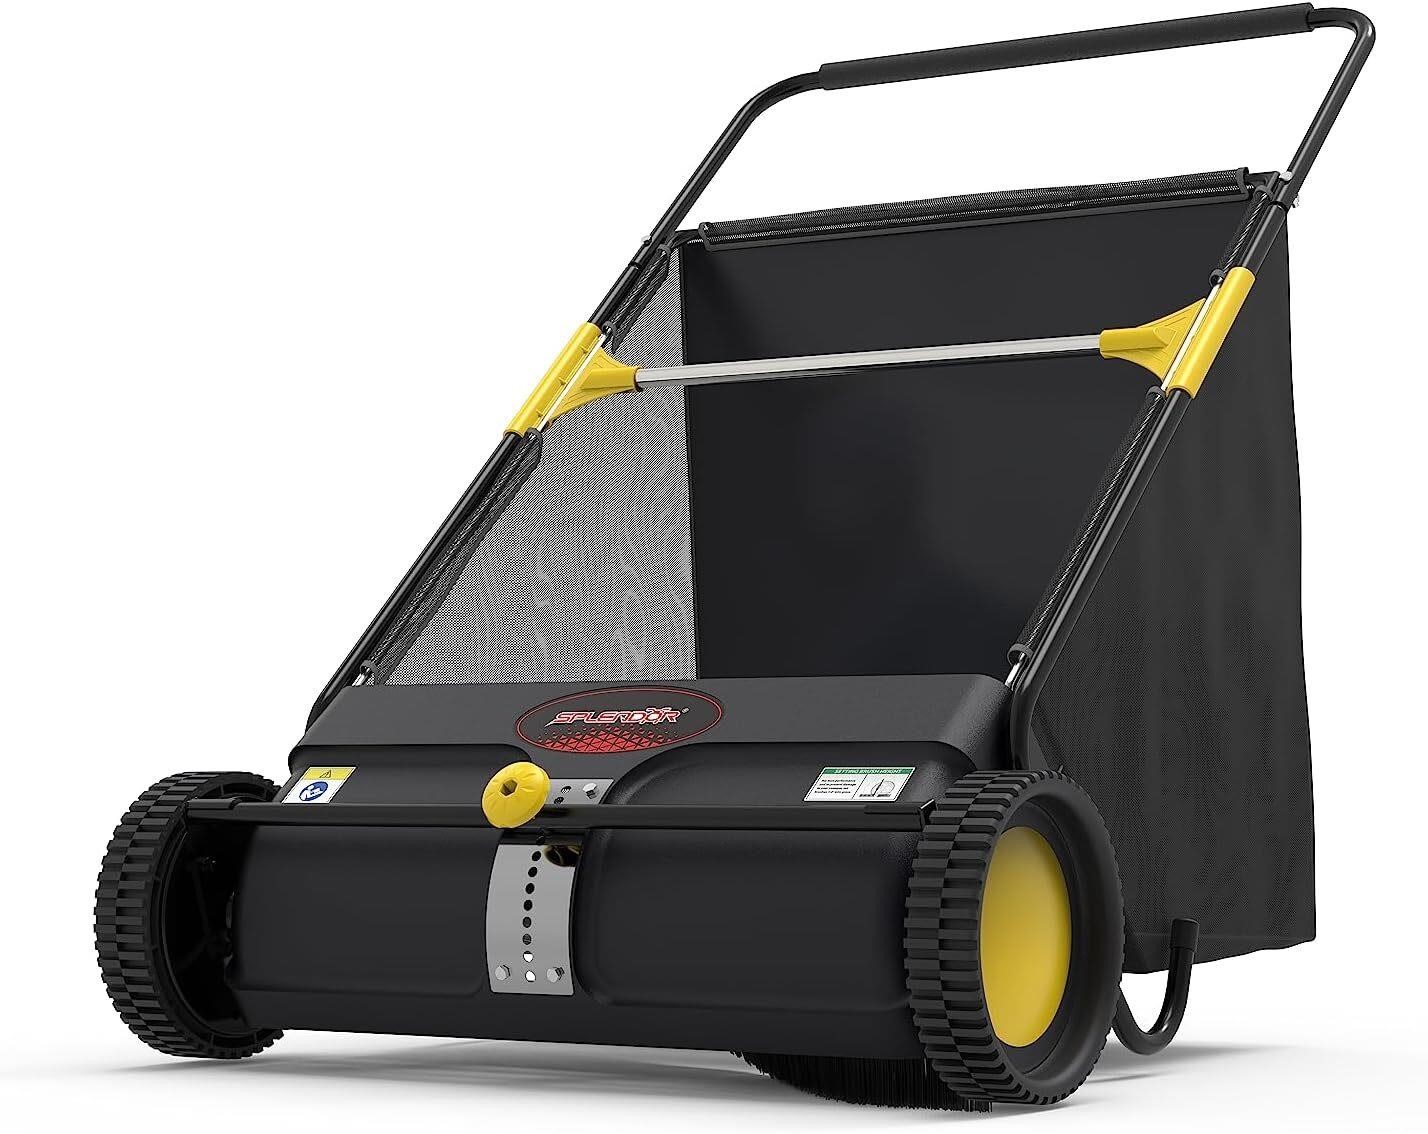 SPLENDOR LS-650A2 26-Inch Push Lawn Sweeper